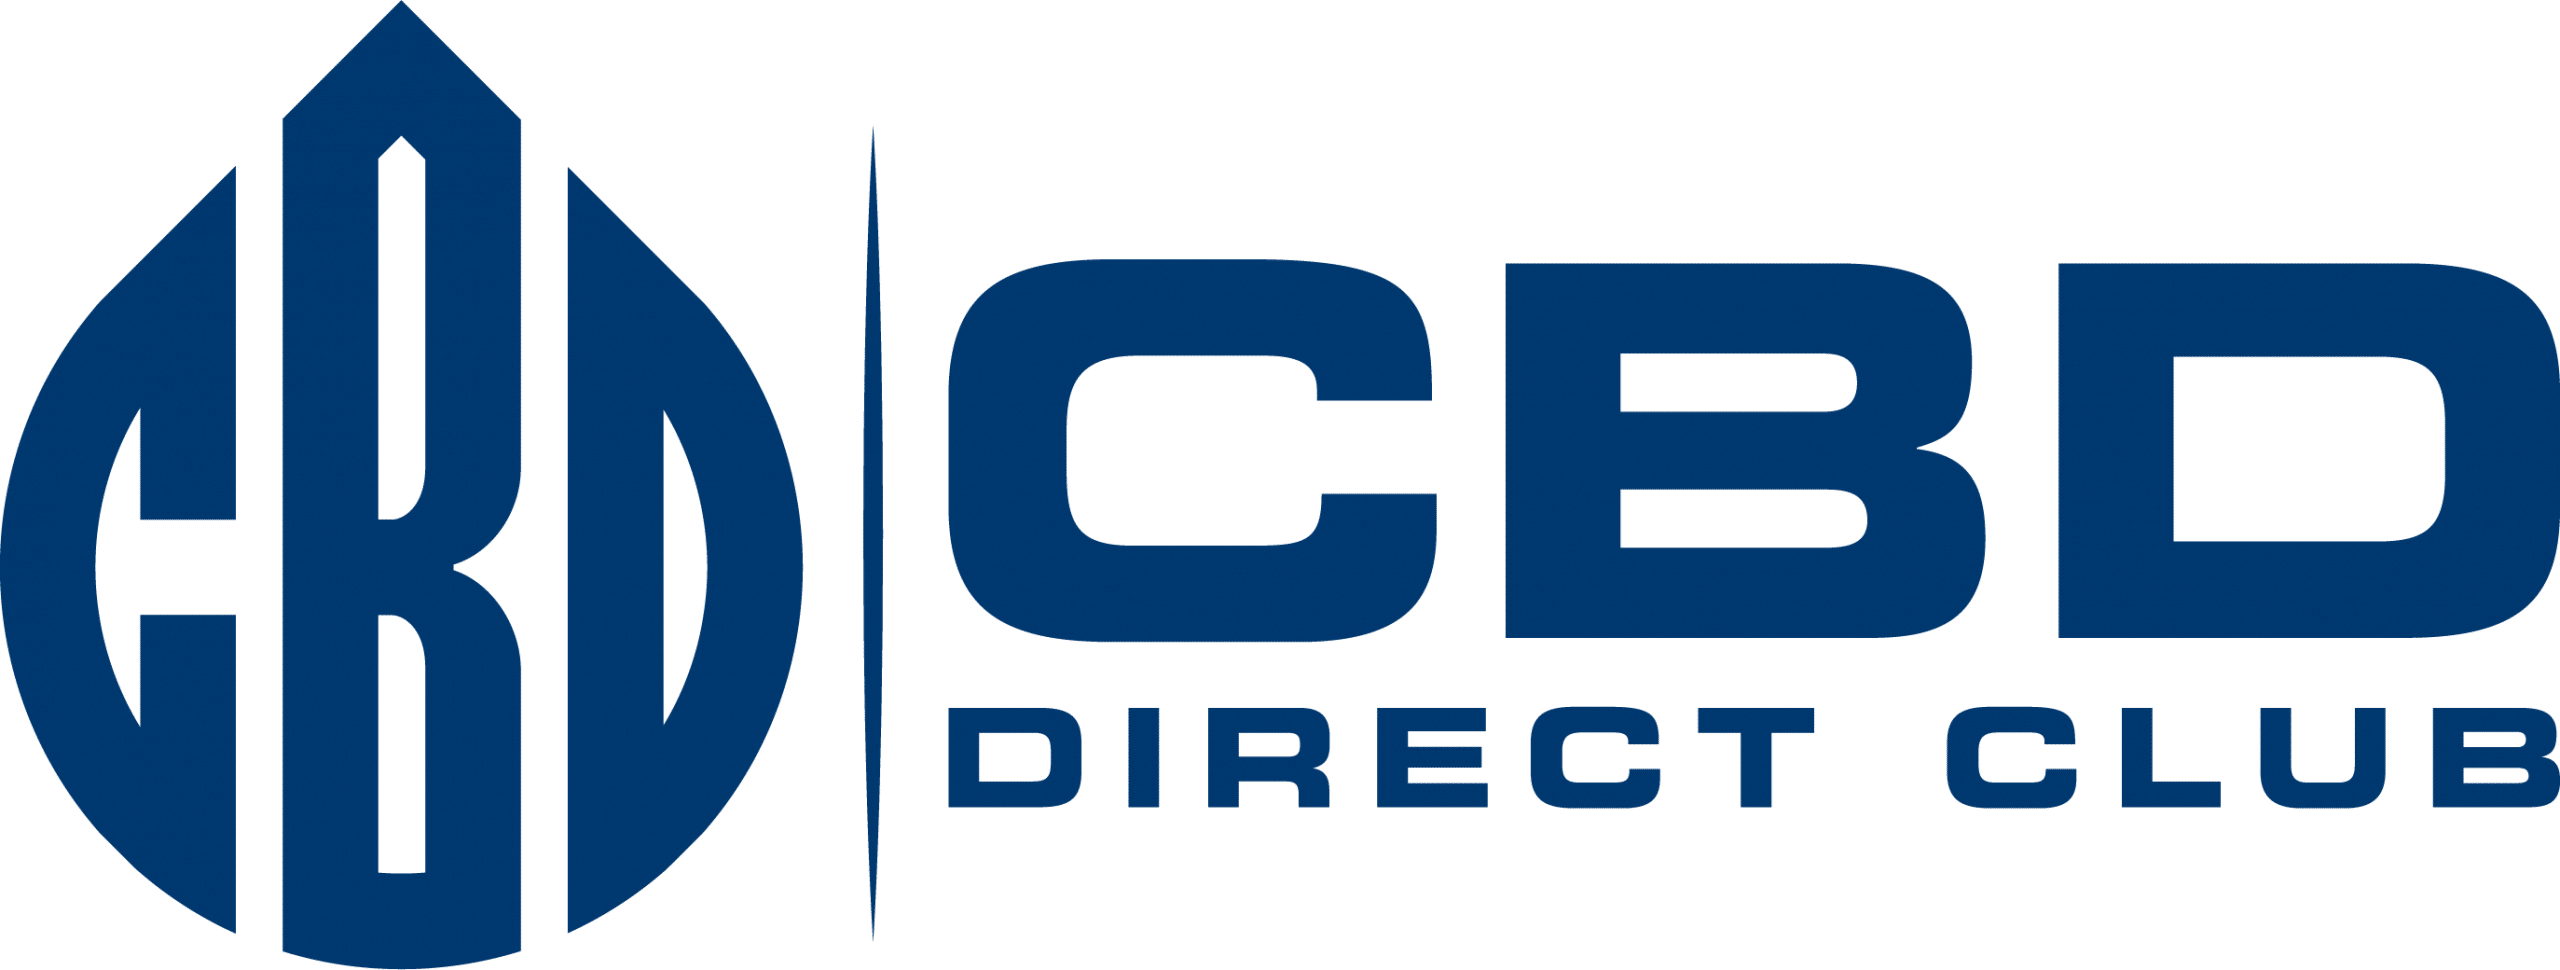 CBD Direct Club Logo